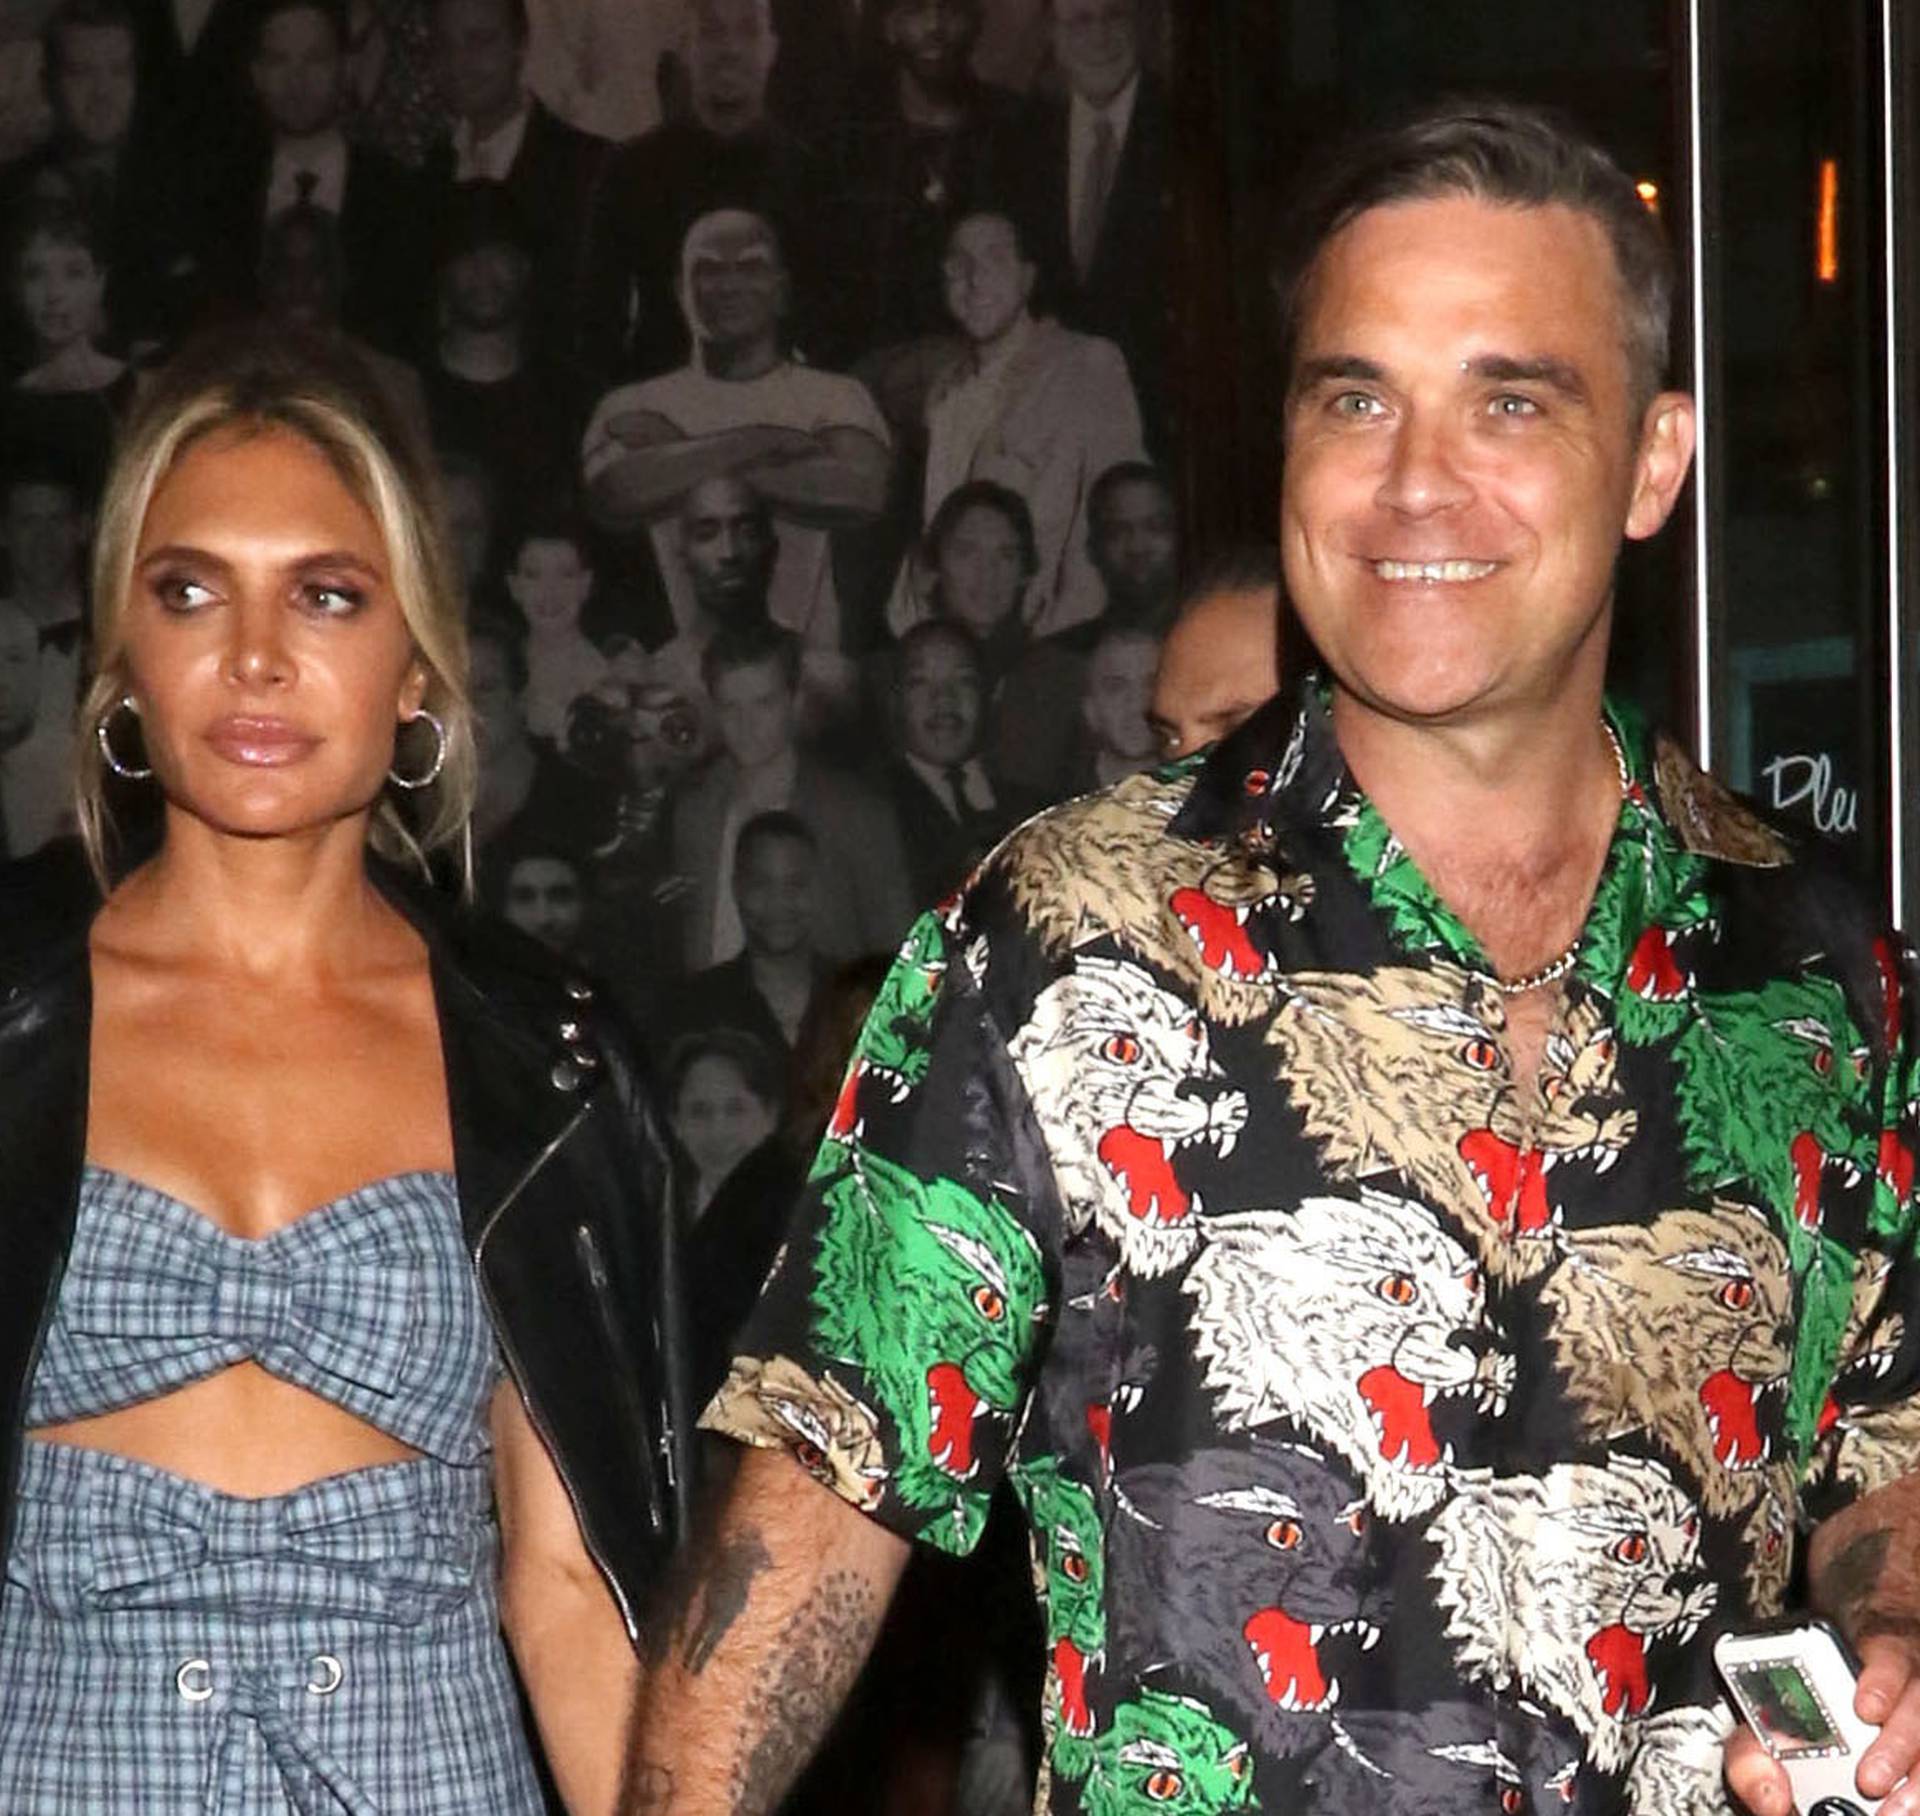 Robbie Williams and Ayda Field Sighting - Los Angeles